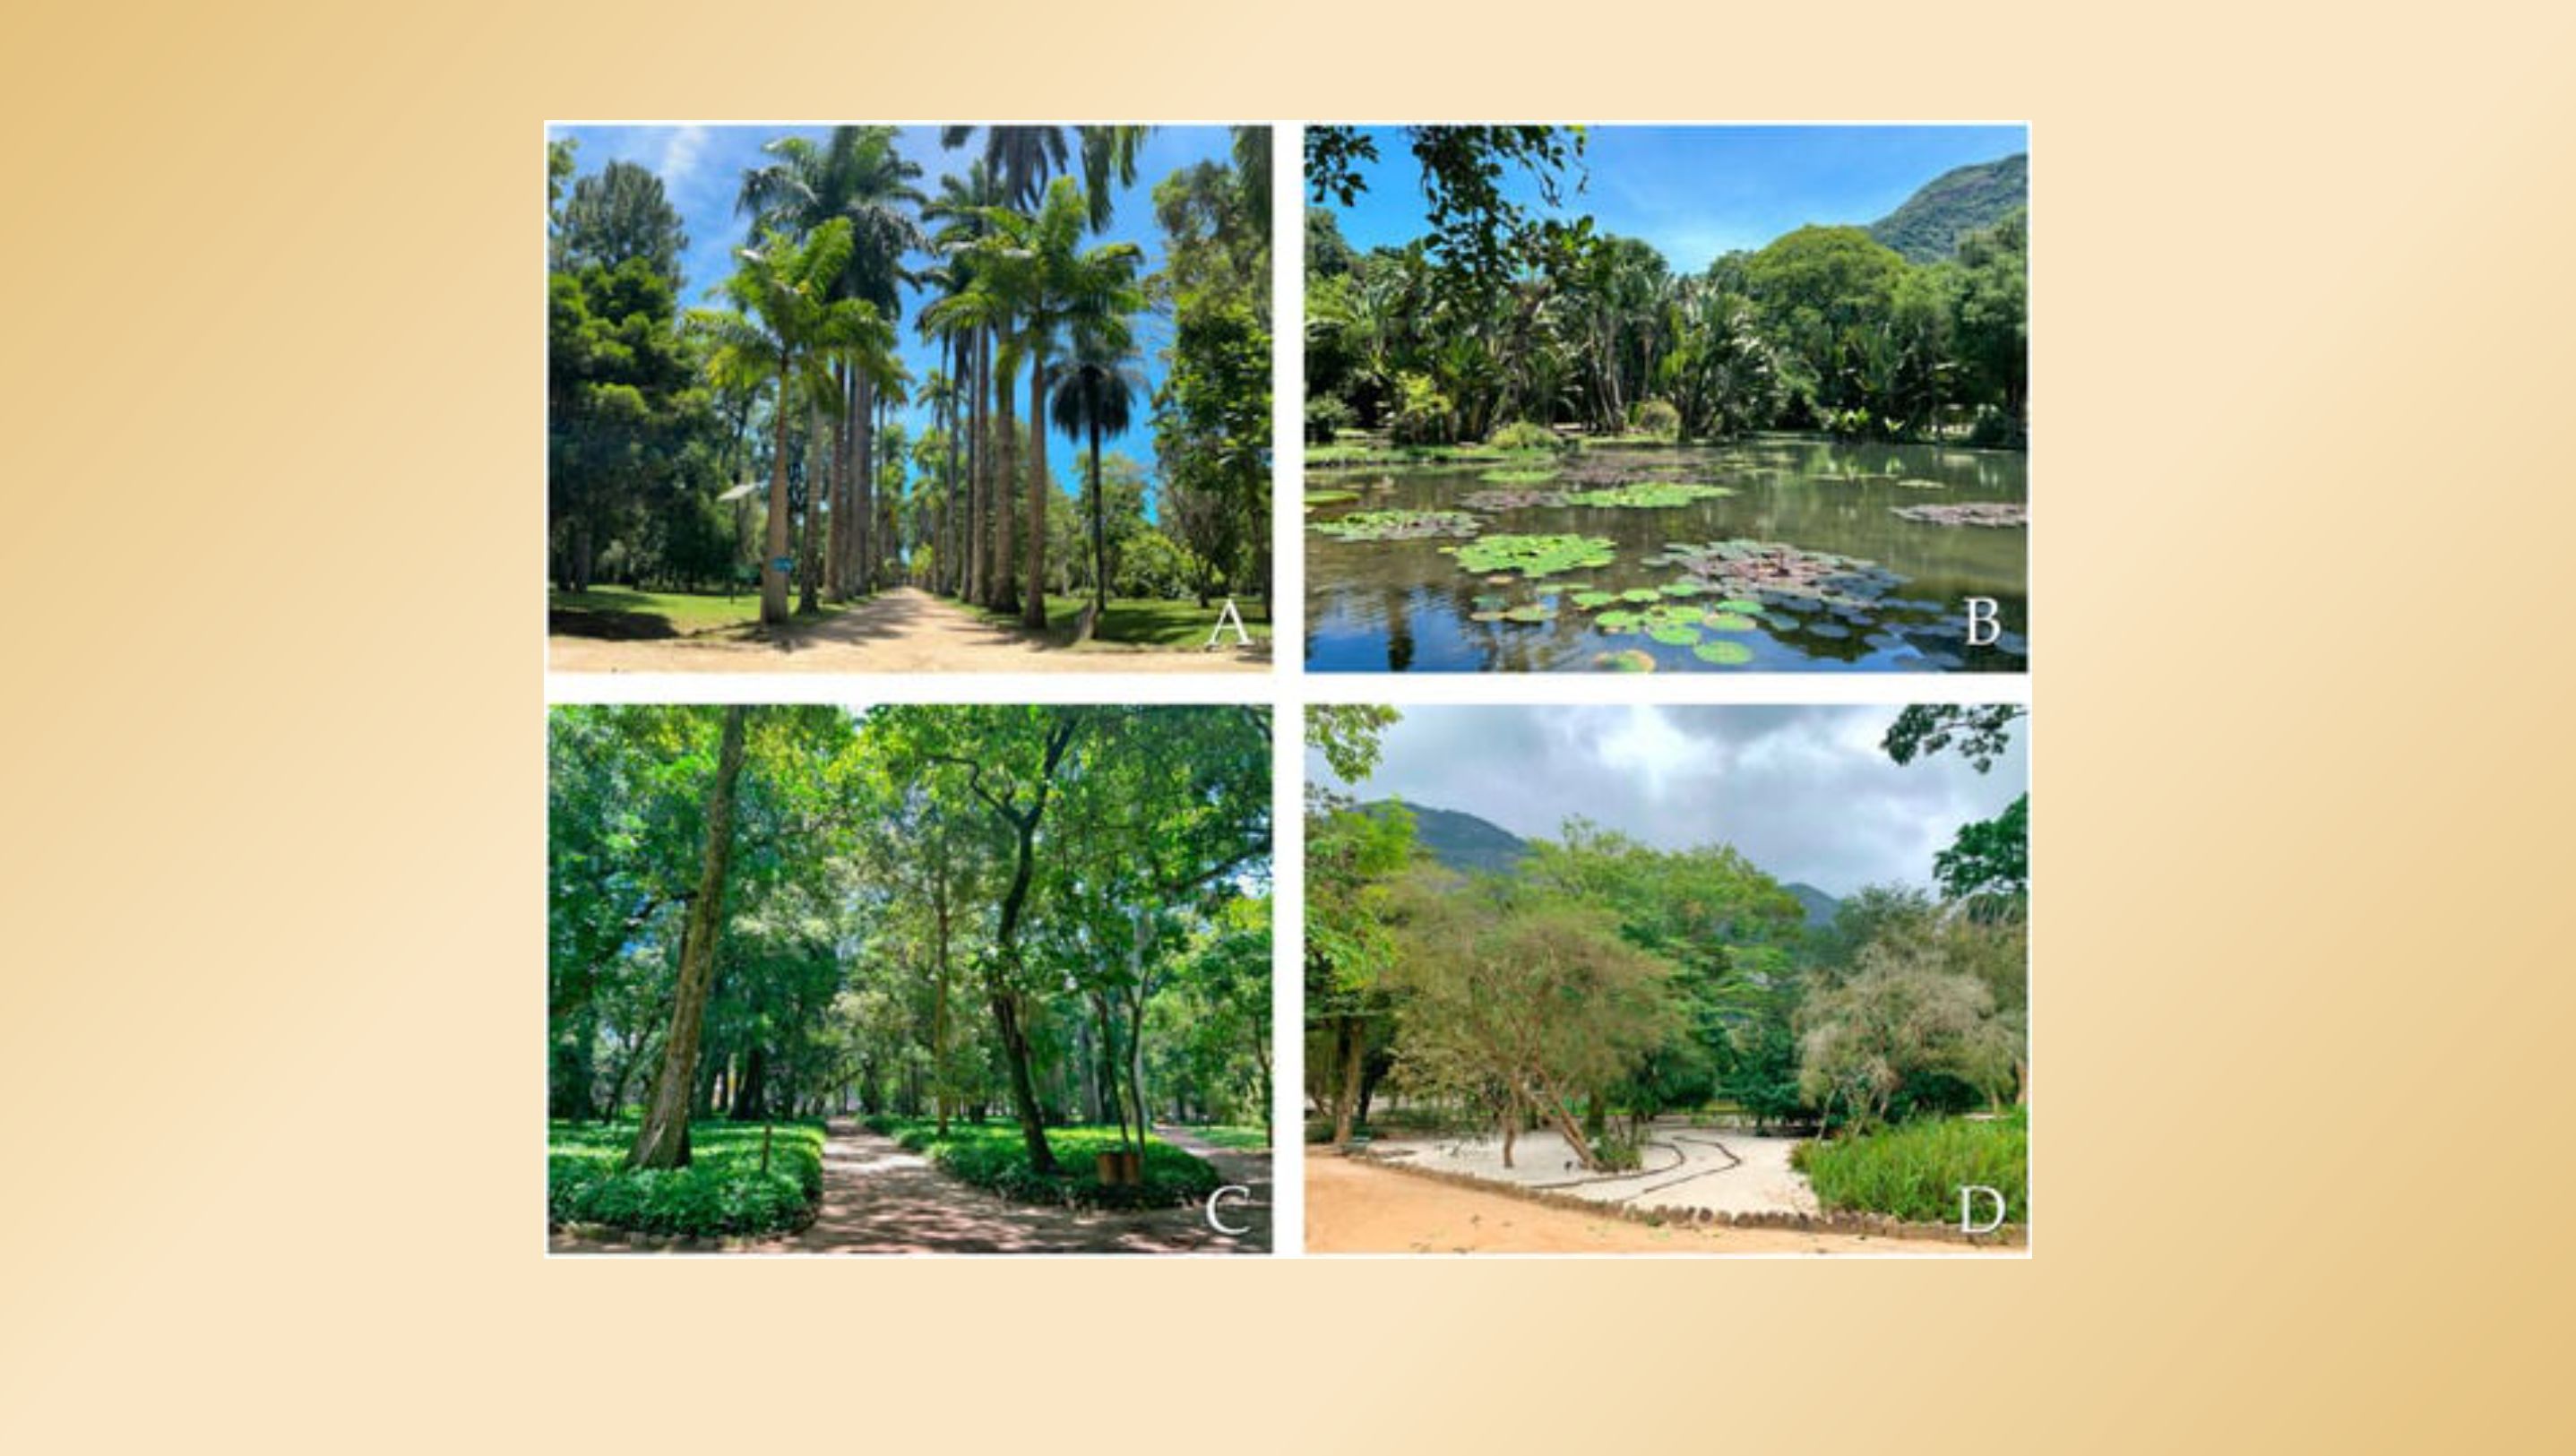 Study shows the richness of the flora present in the Rio de Janeiro Botanical Garden Arboretum